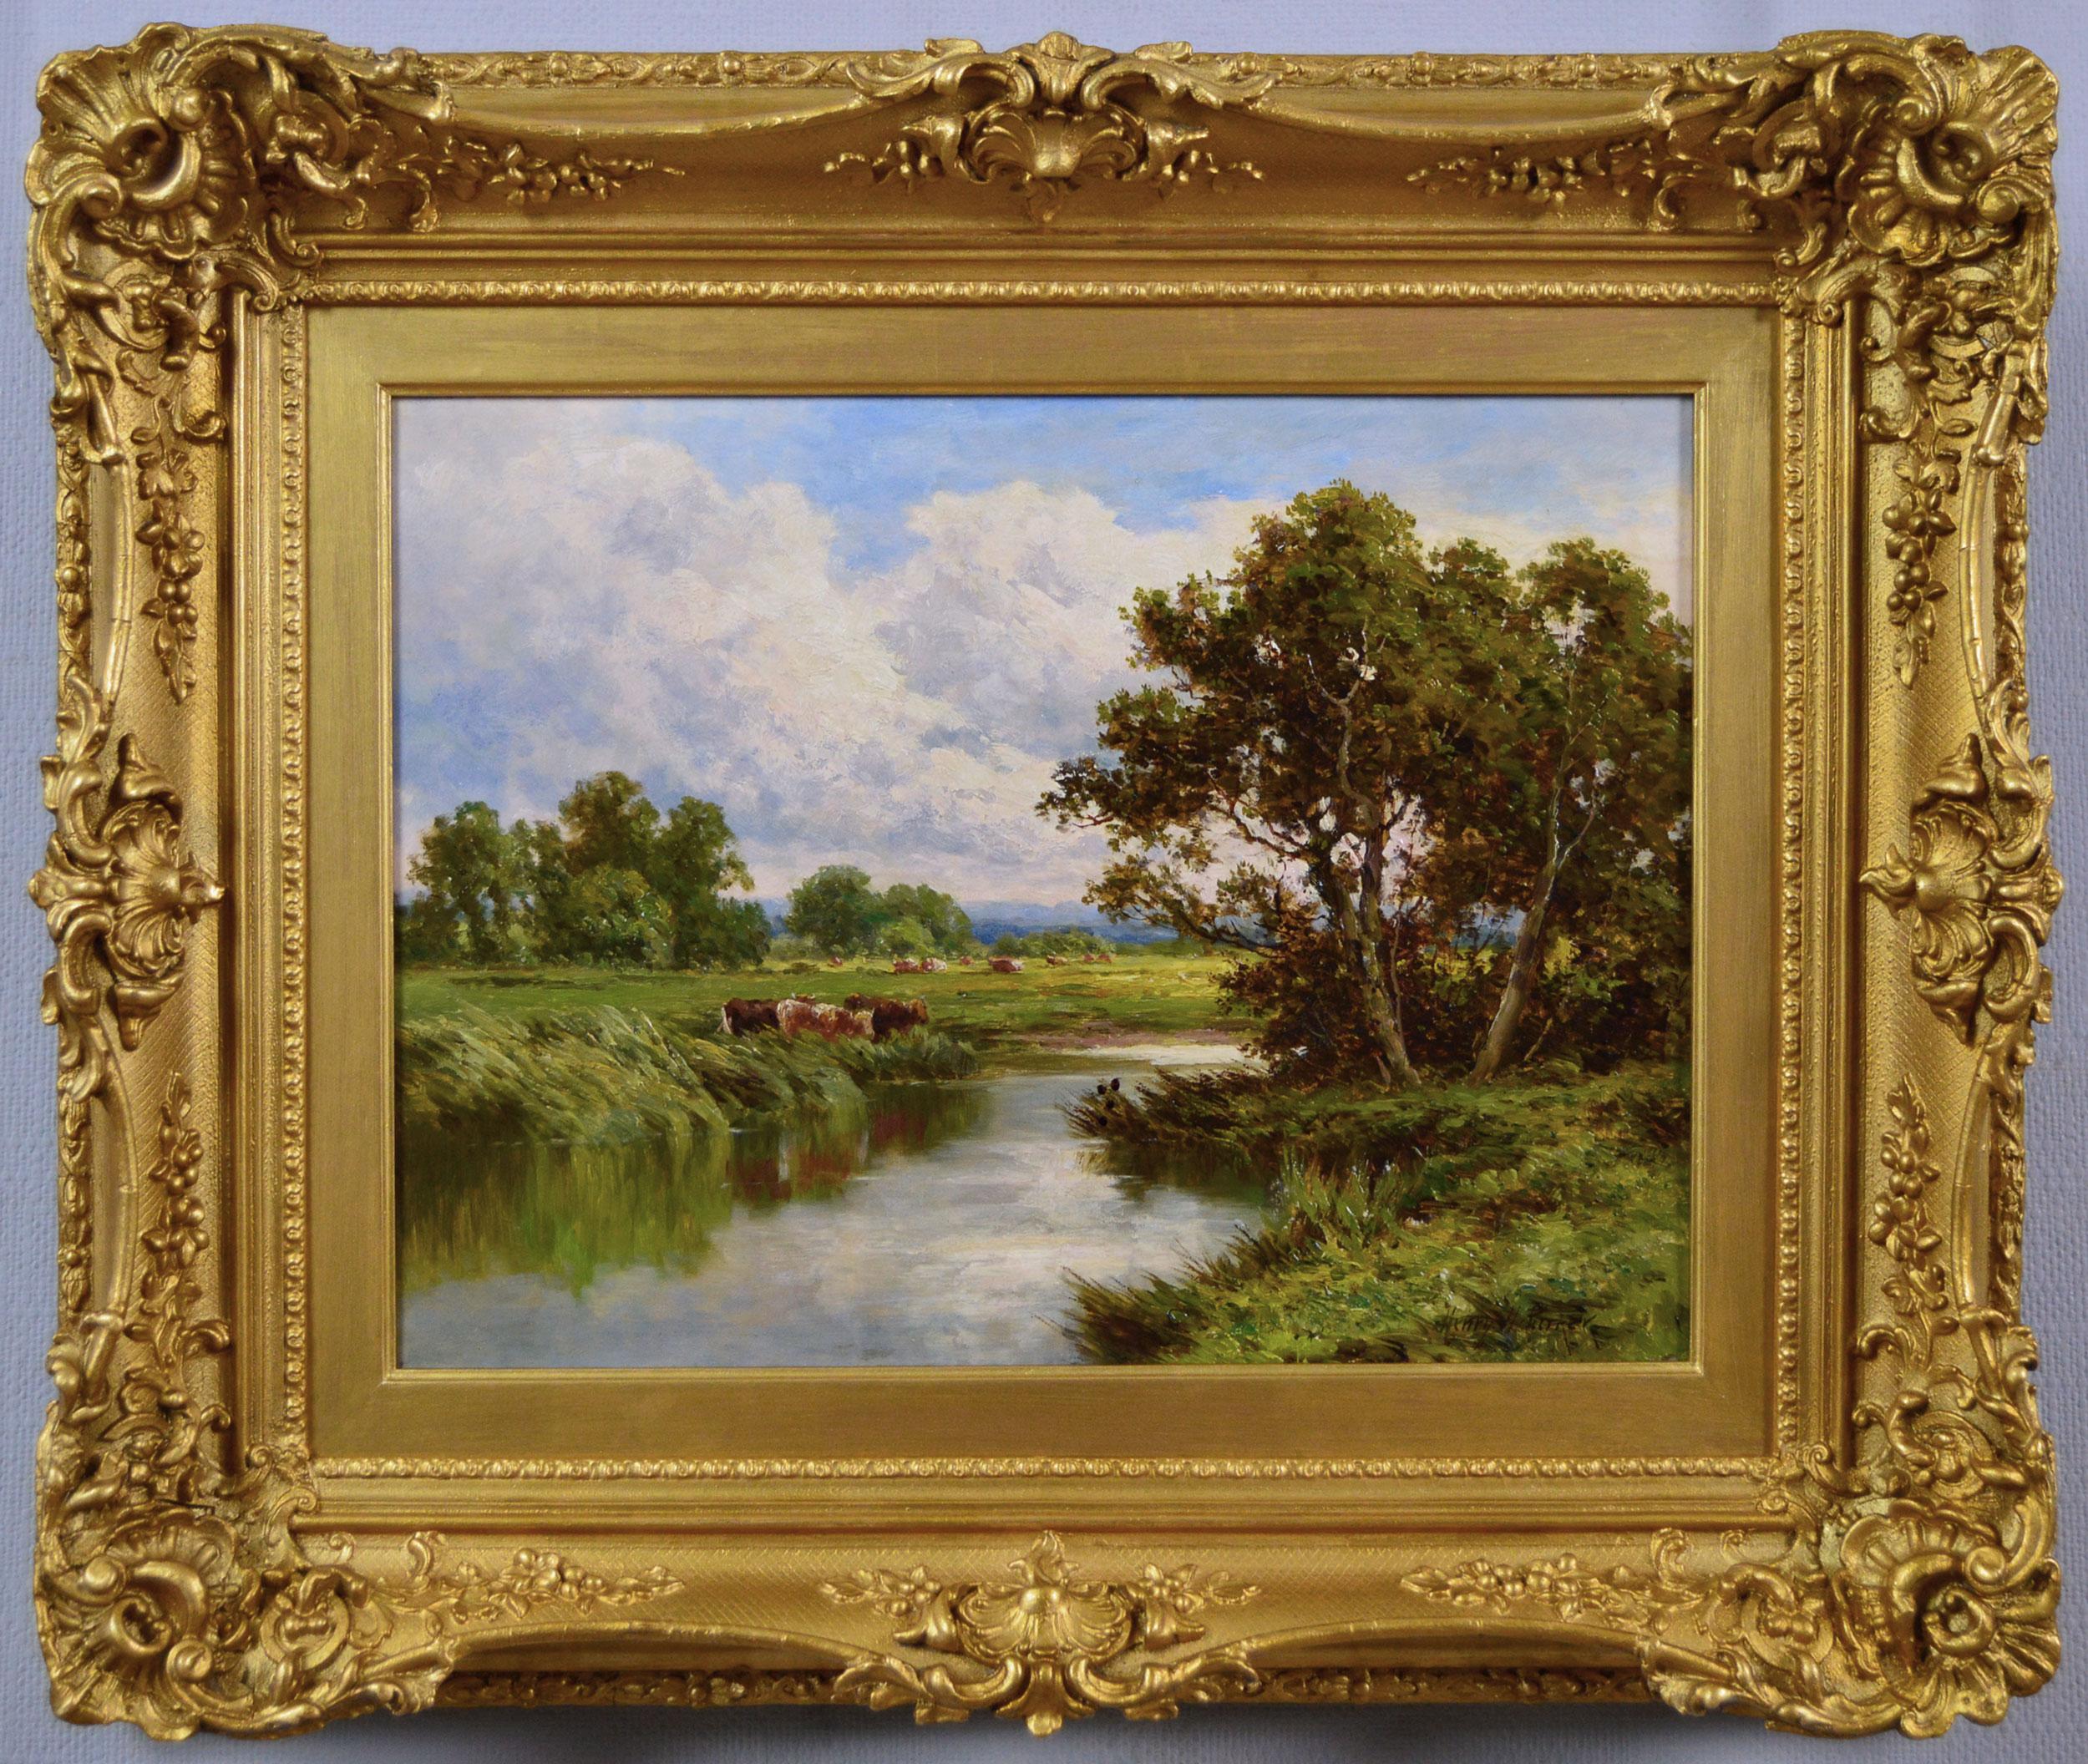 Henry H. Parker Landscape Painting - 19th Century Surrey landscape oil painting of the River Mole at Dorking